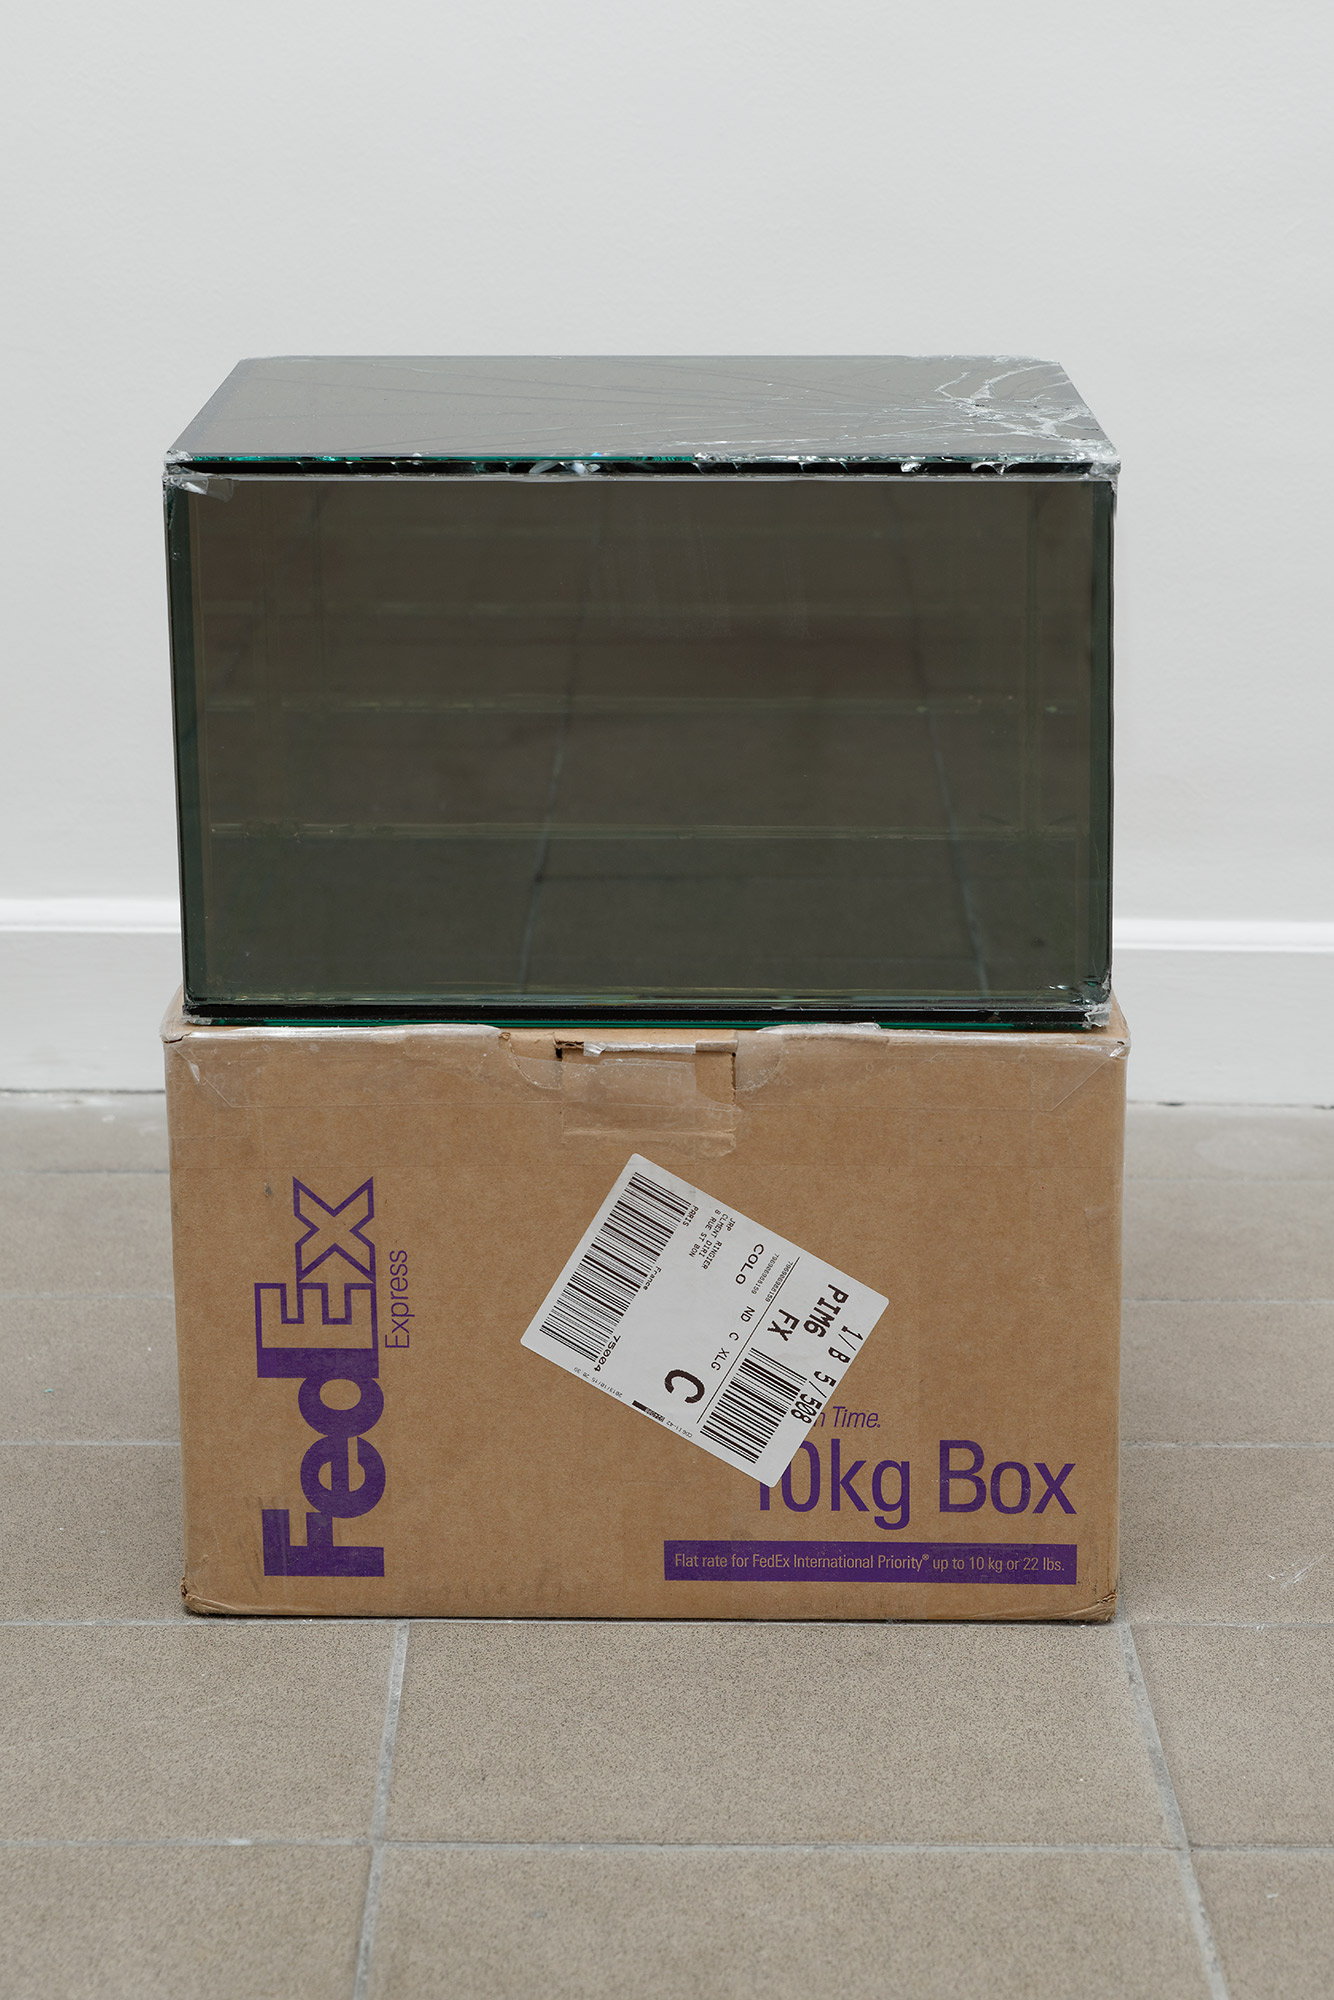   FedEx® 10kg Box  © 2006 FedEx 149801 REV 9/06 MP, International Priority, Los Angeles–Paris trk#796907687919, October 14–16, 2013    2013–   Laminated Mirropane, FedEx shipping box, accrued FedEx shipping and tracking labels, silicone, metal, tape 